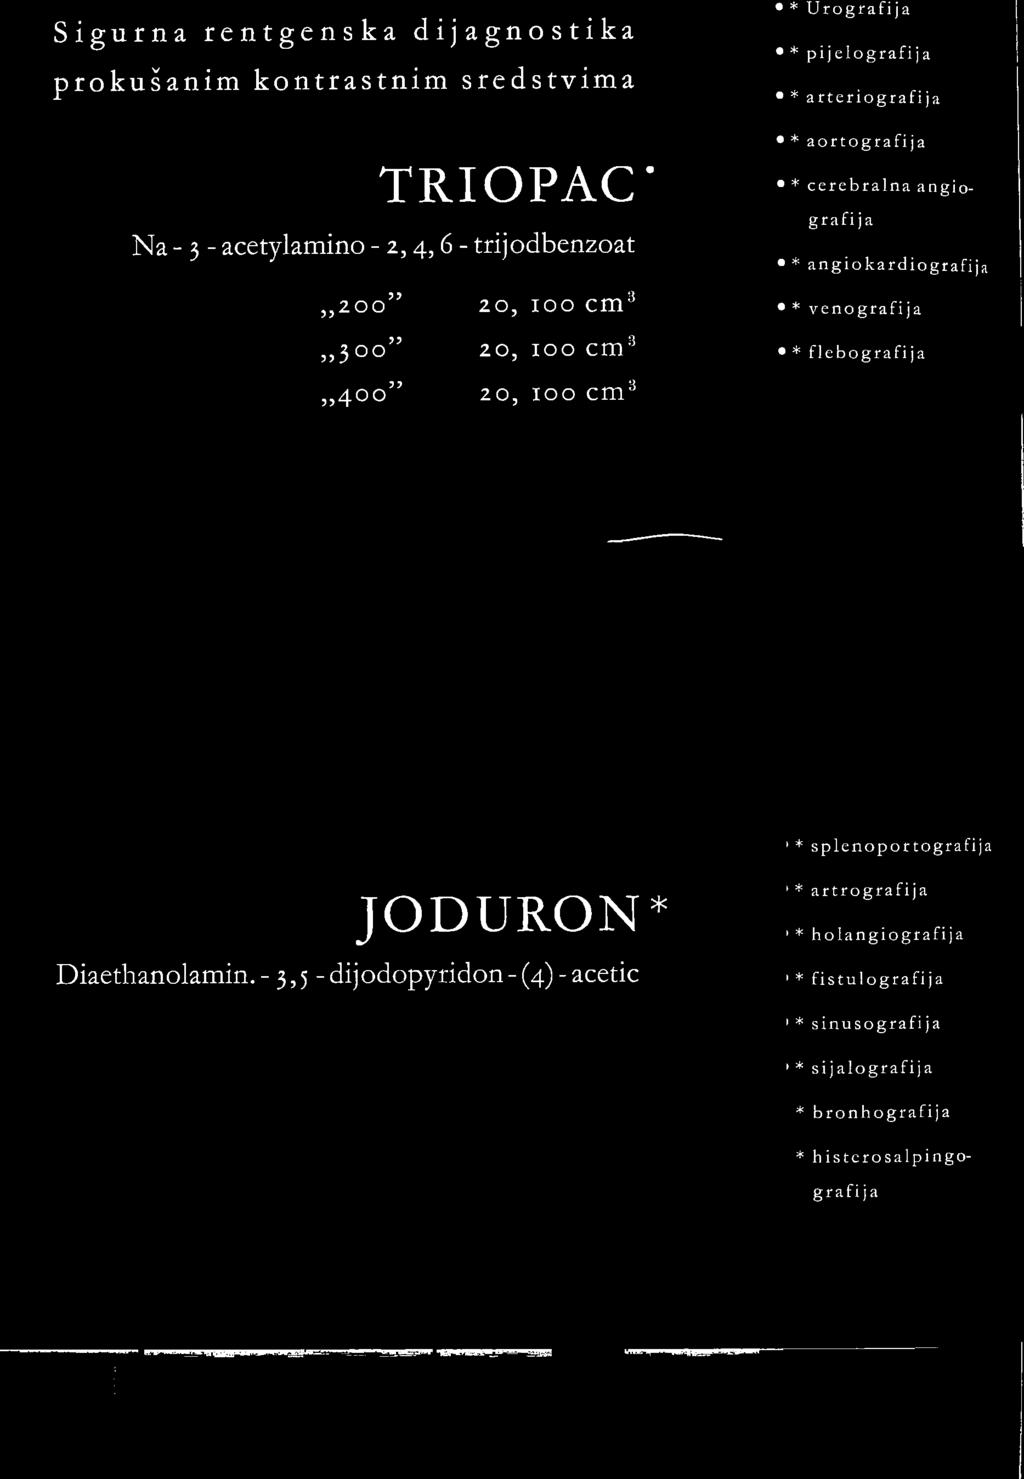 splenoportografija JODURON* Diaethanolamin.